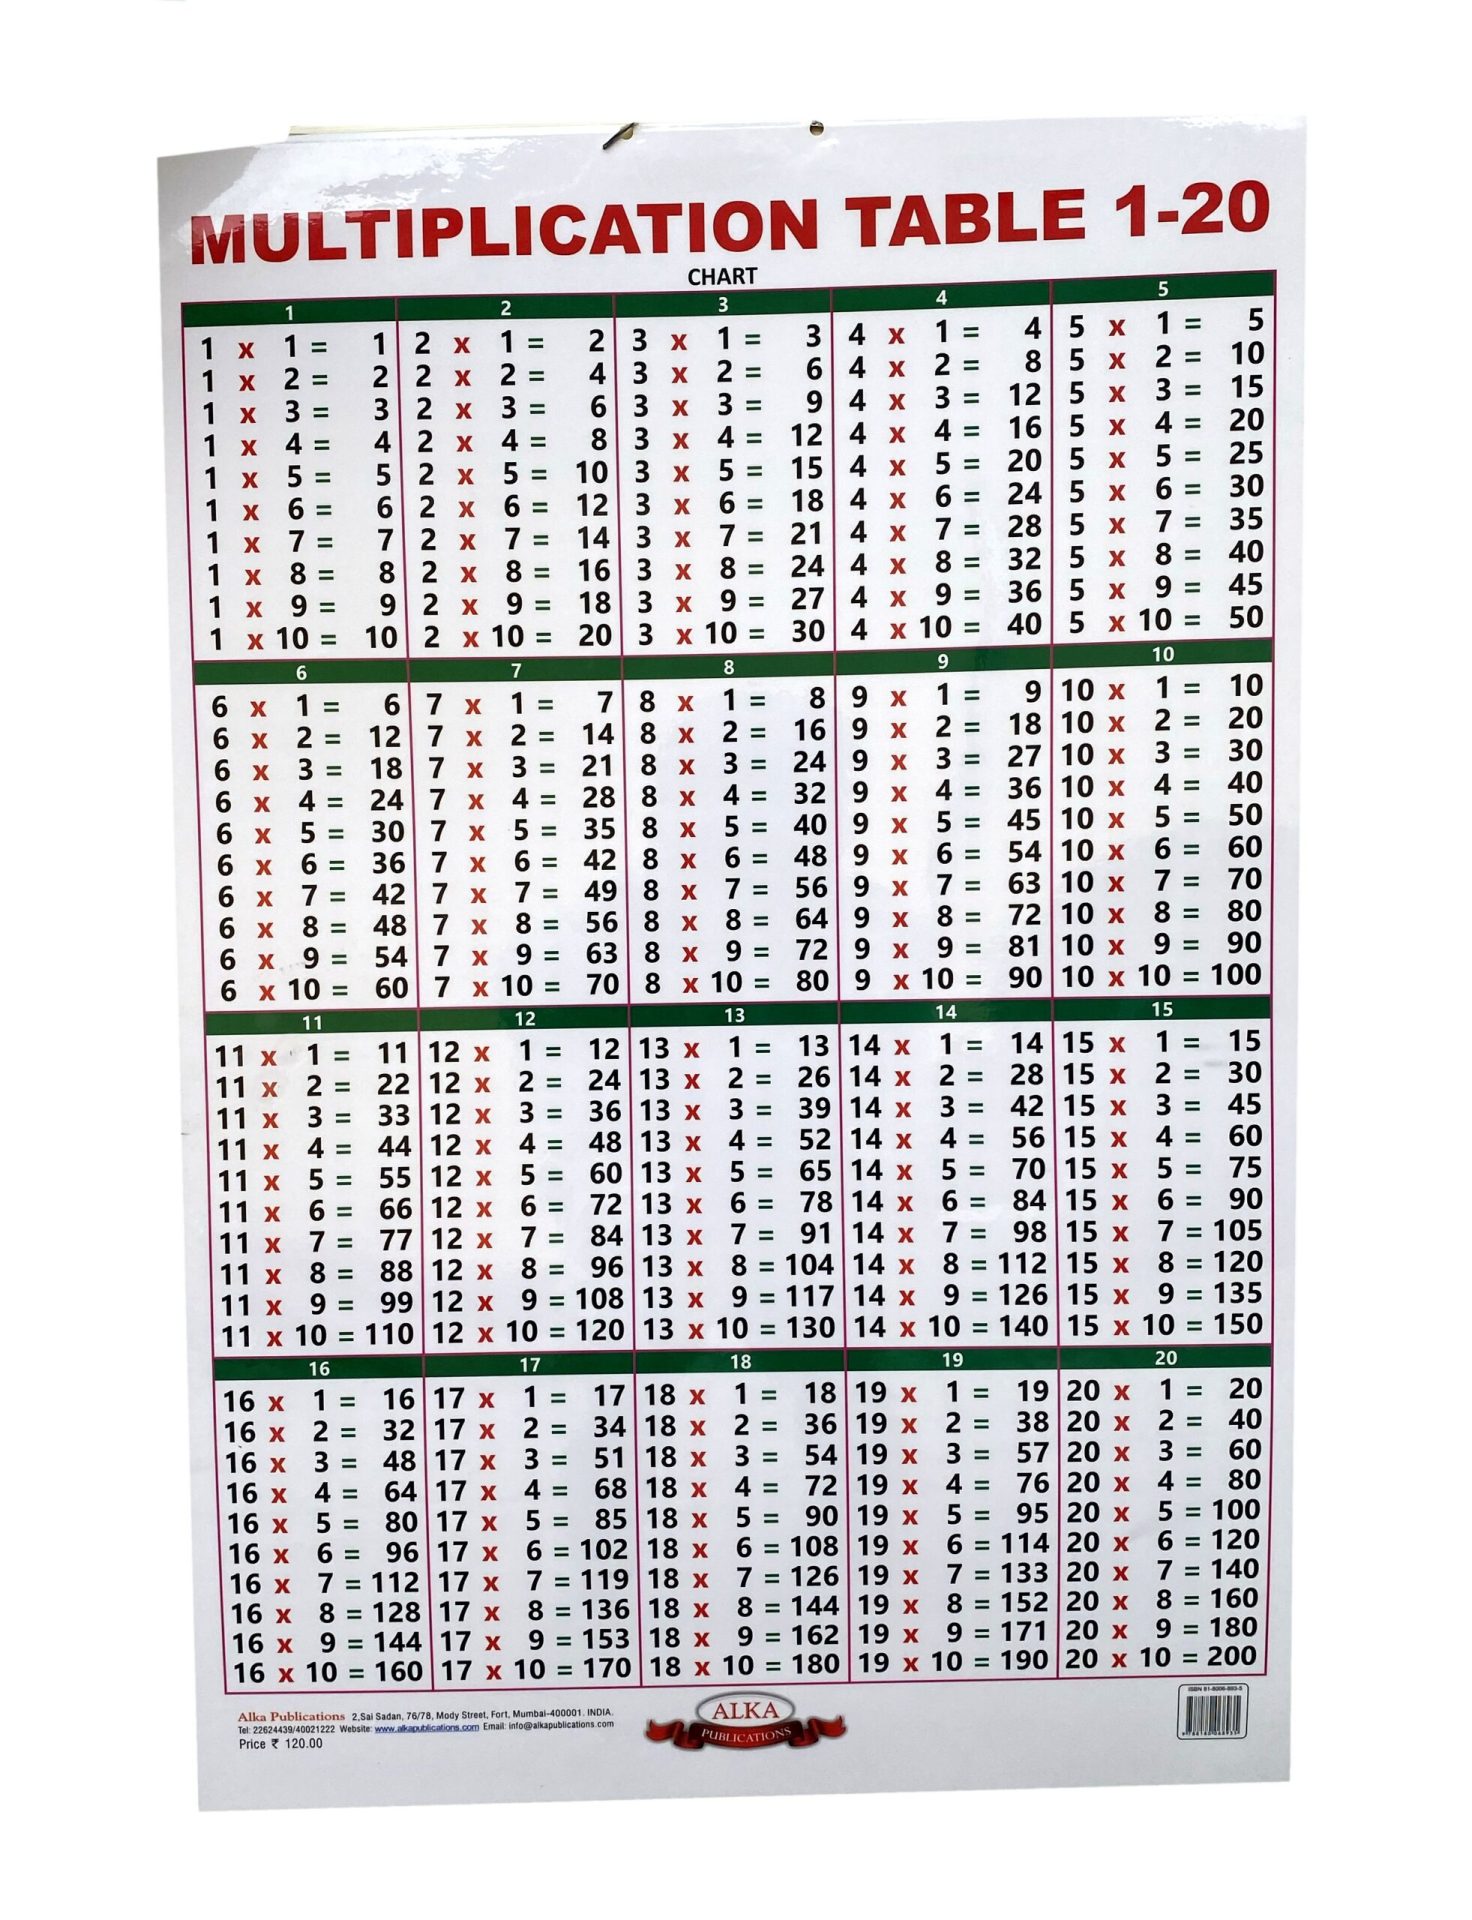 Chart Number / Multiplication